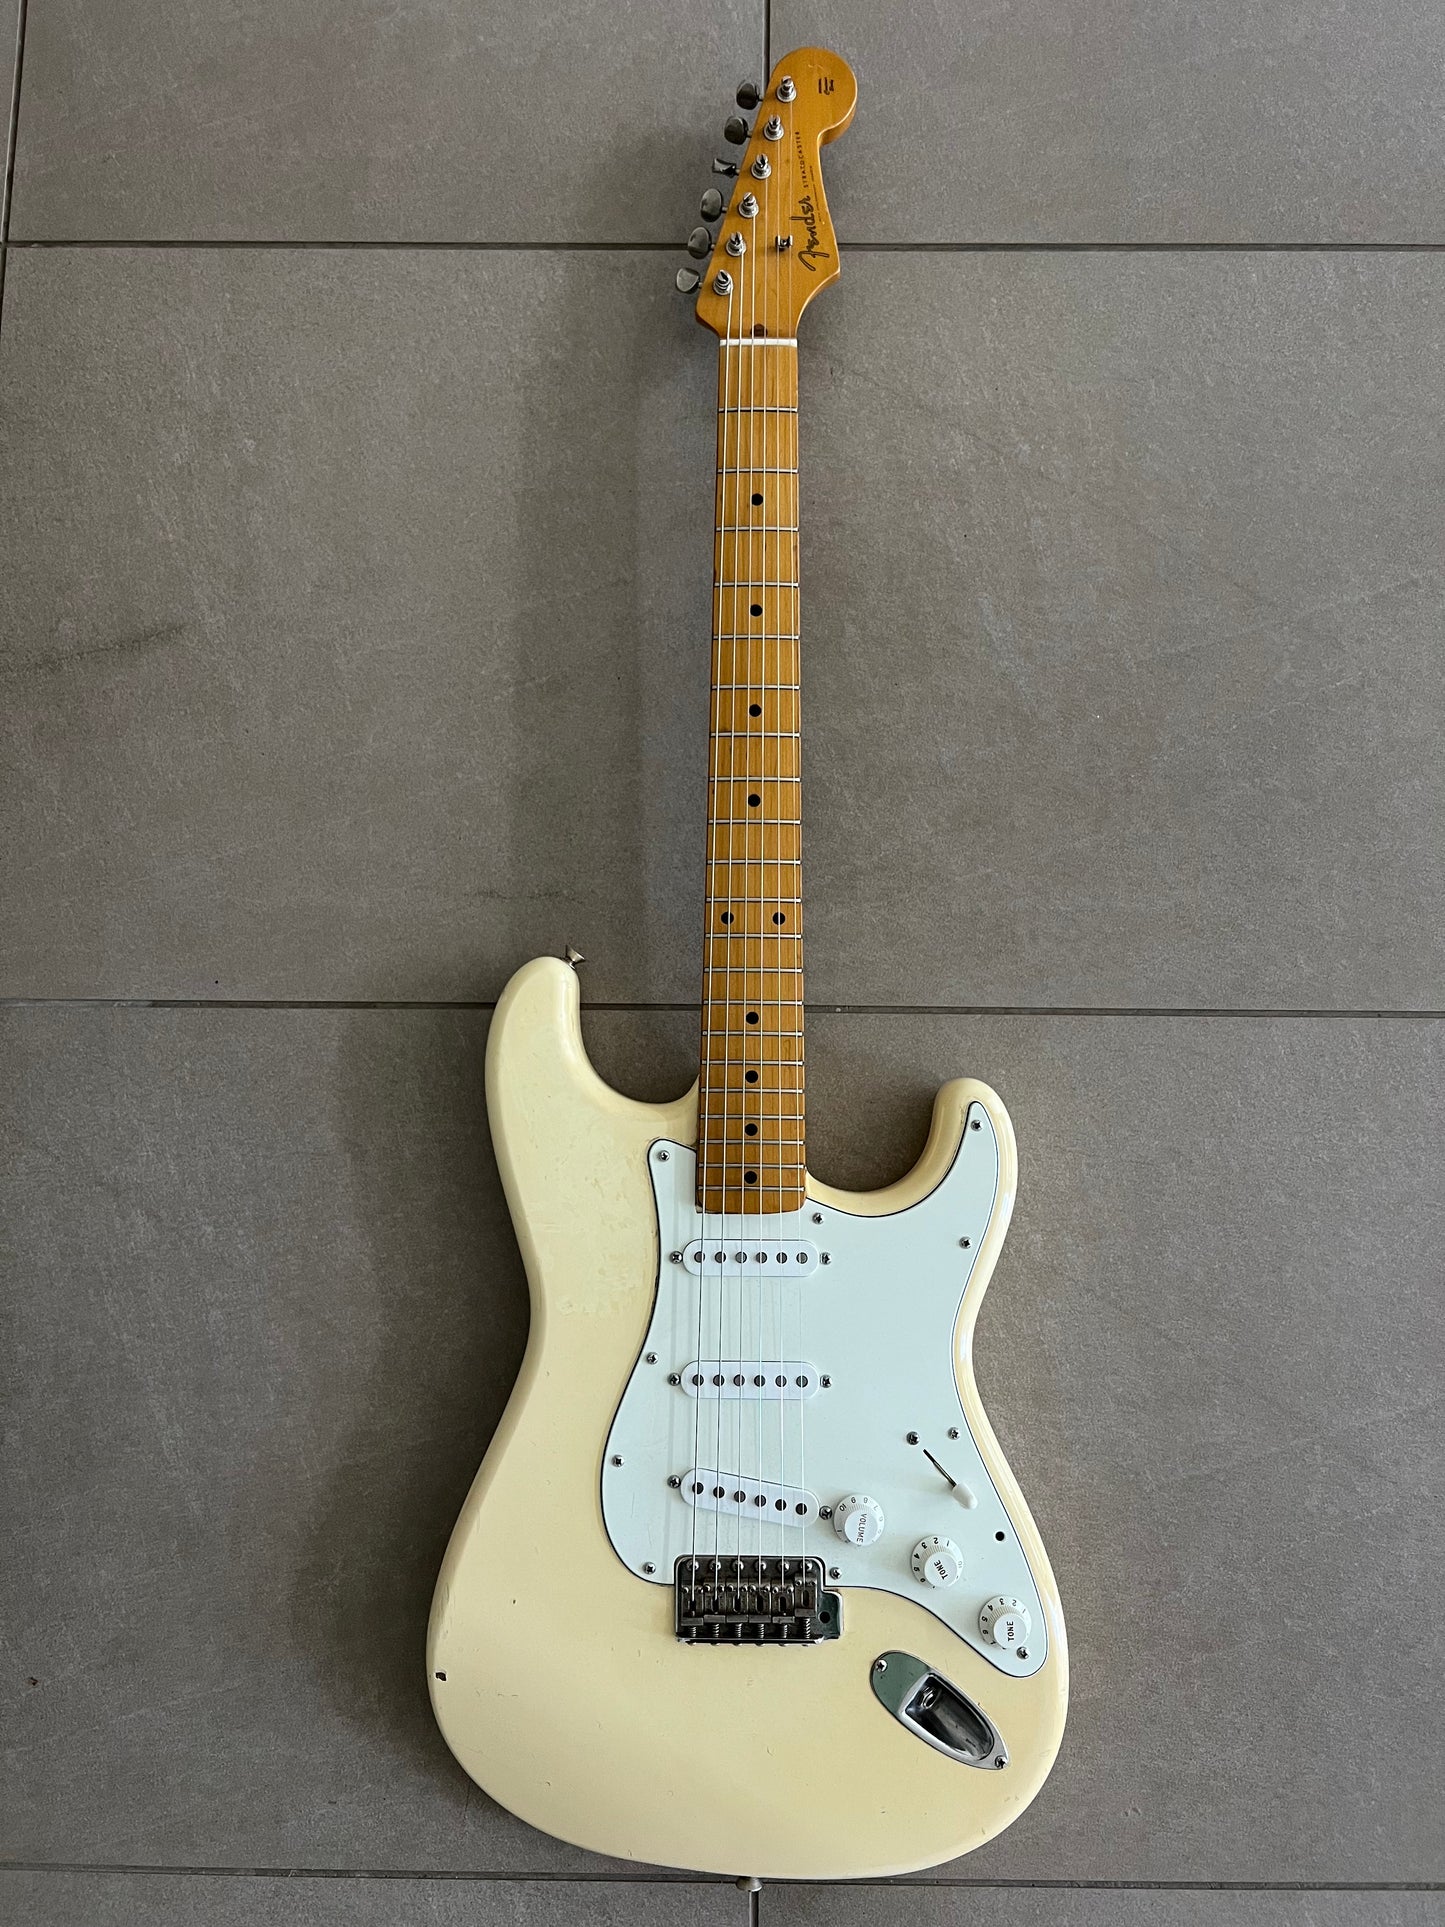 Fender Stratocaster Electric Guitar 1984-87 E serial MIJ ST57